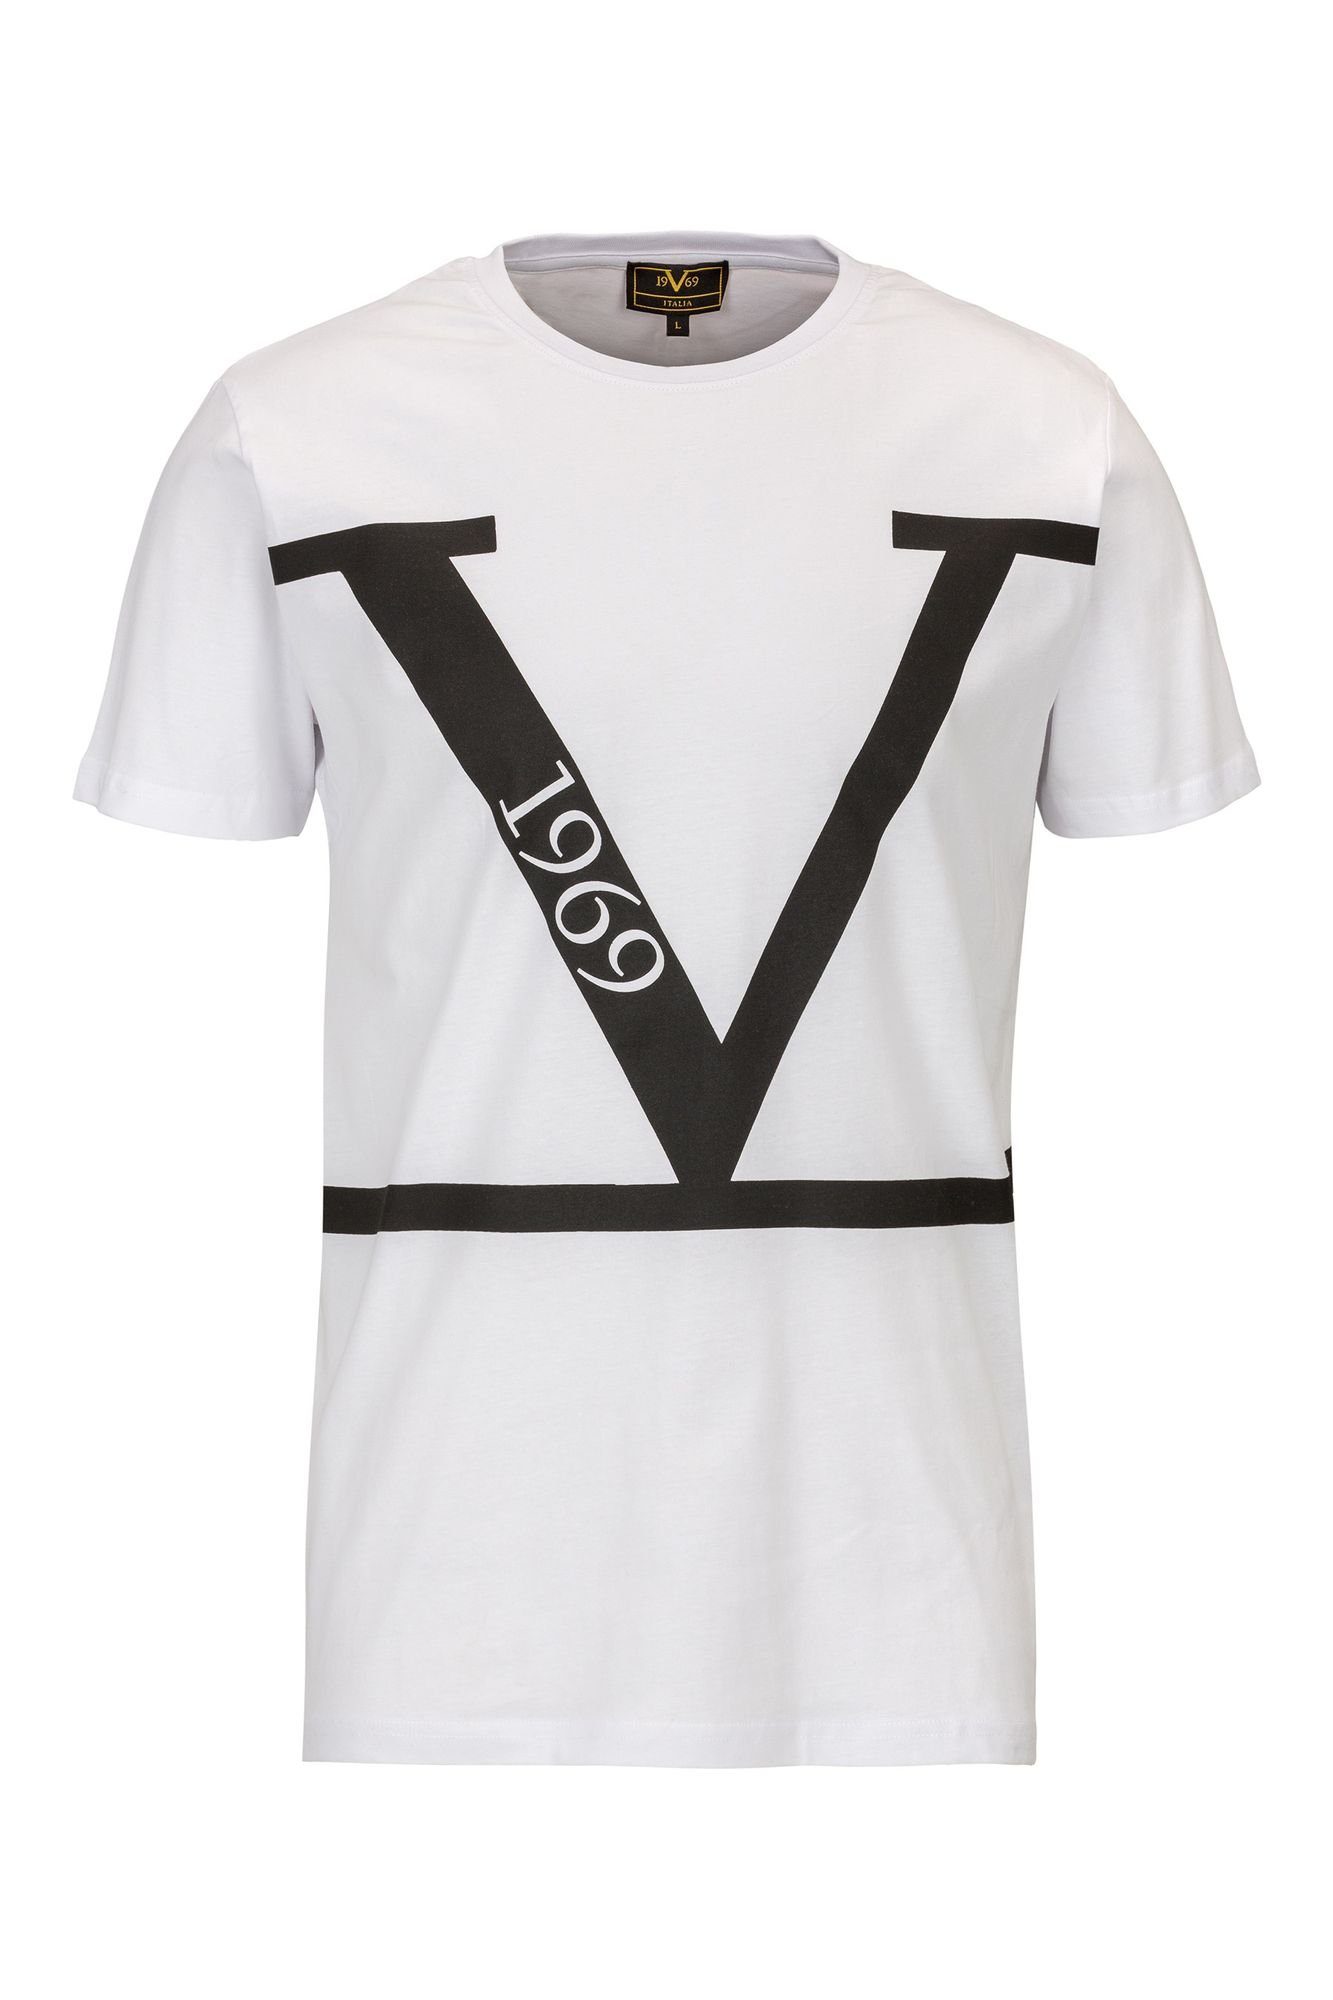 19V69 Italia T-Shirt by Gabriel Versace